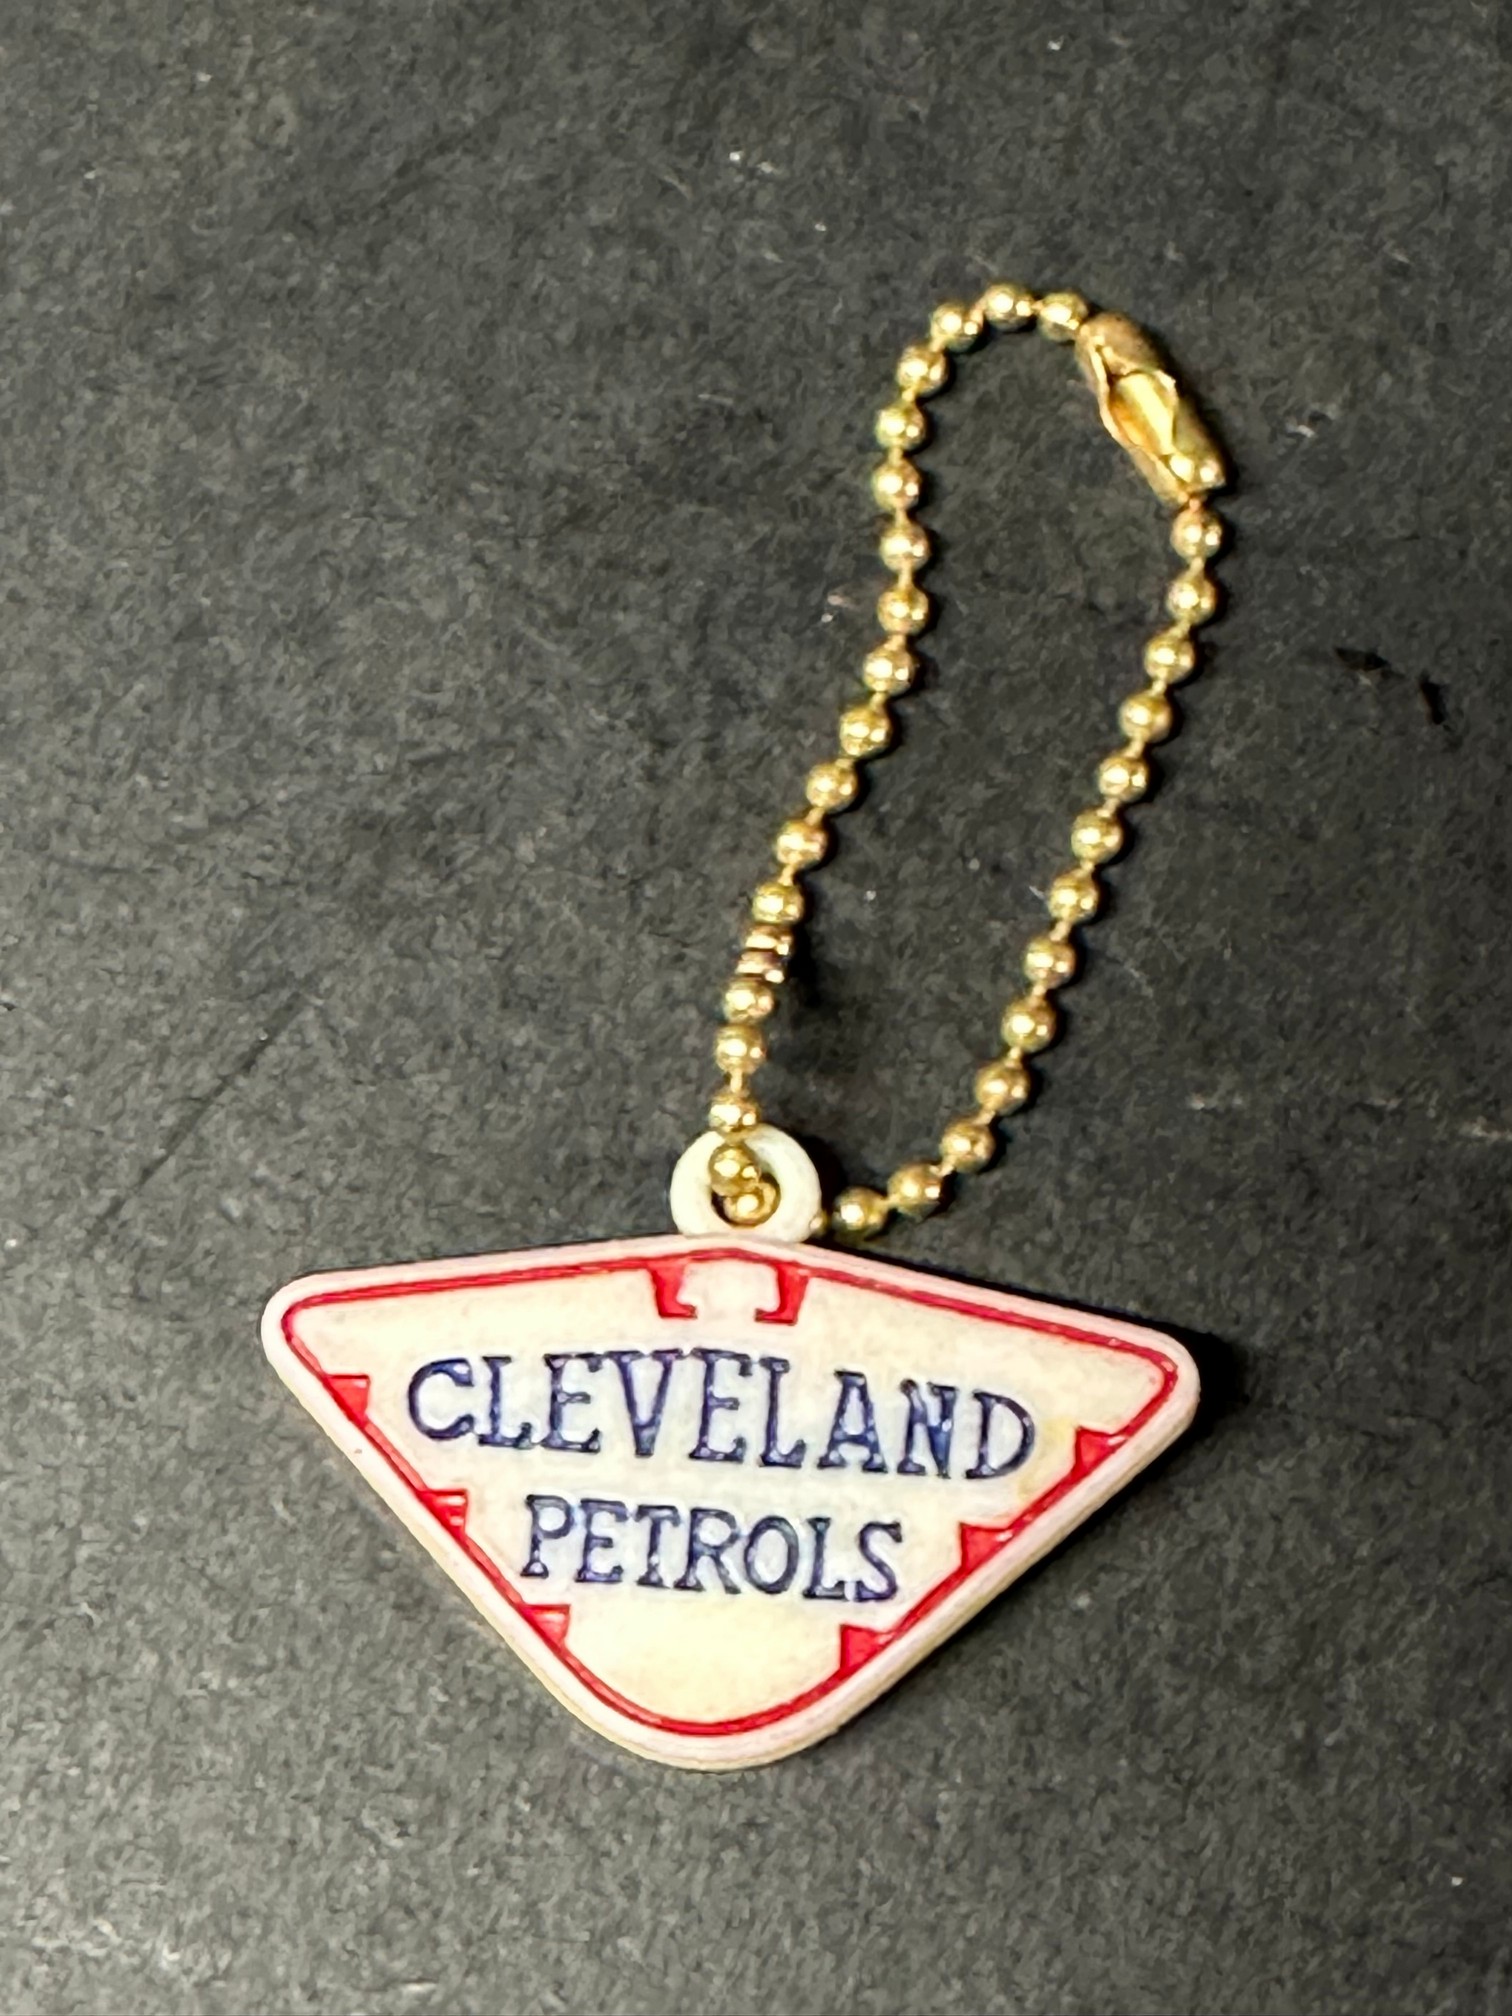 A Cleveland Petrols keychain.